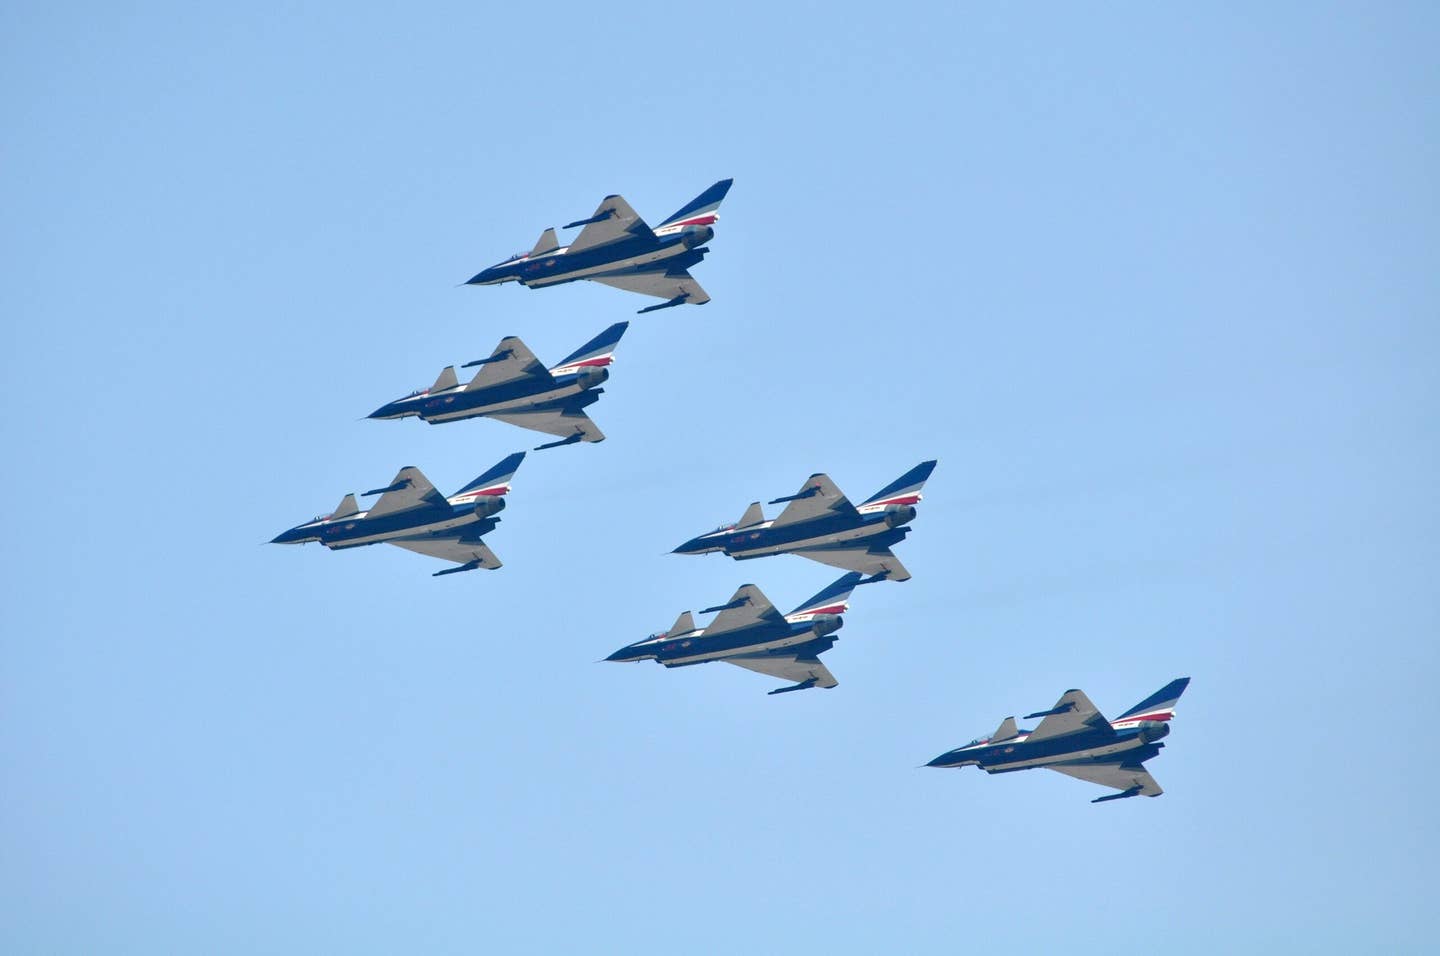 August 1st aerobatics team flying J-10AY jets. <em>Yuxuan1122&nbsp;via Wikimedia Commons</em>